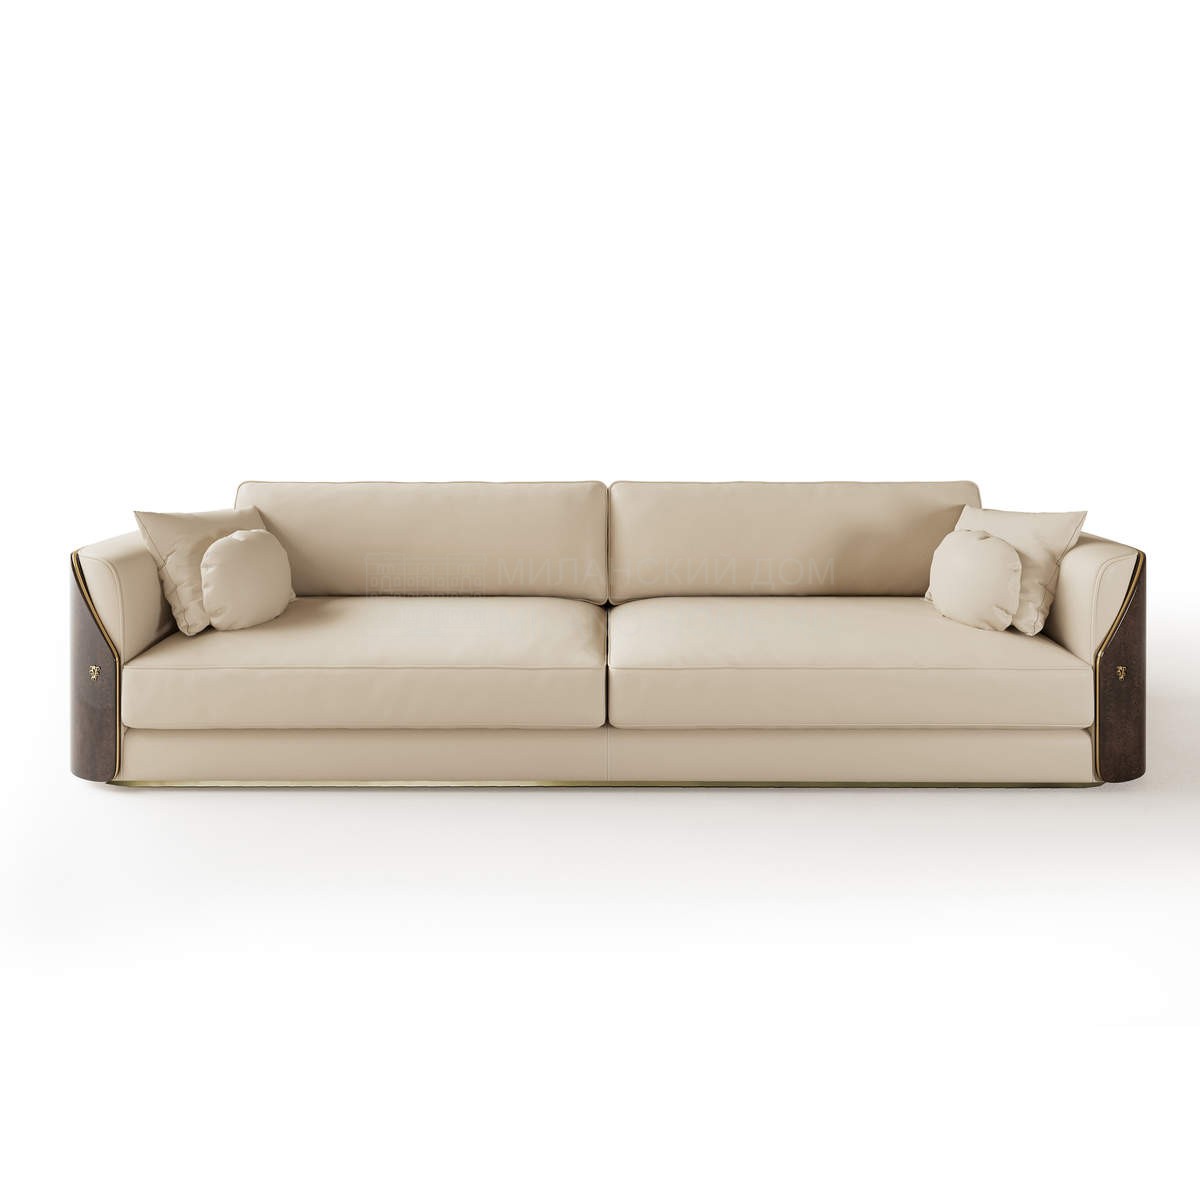 Прямой диван Fitzgerald sofa из Италии фабрики IPE CAVALLI VISIONNAIRE